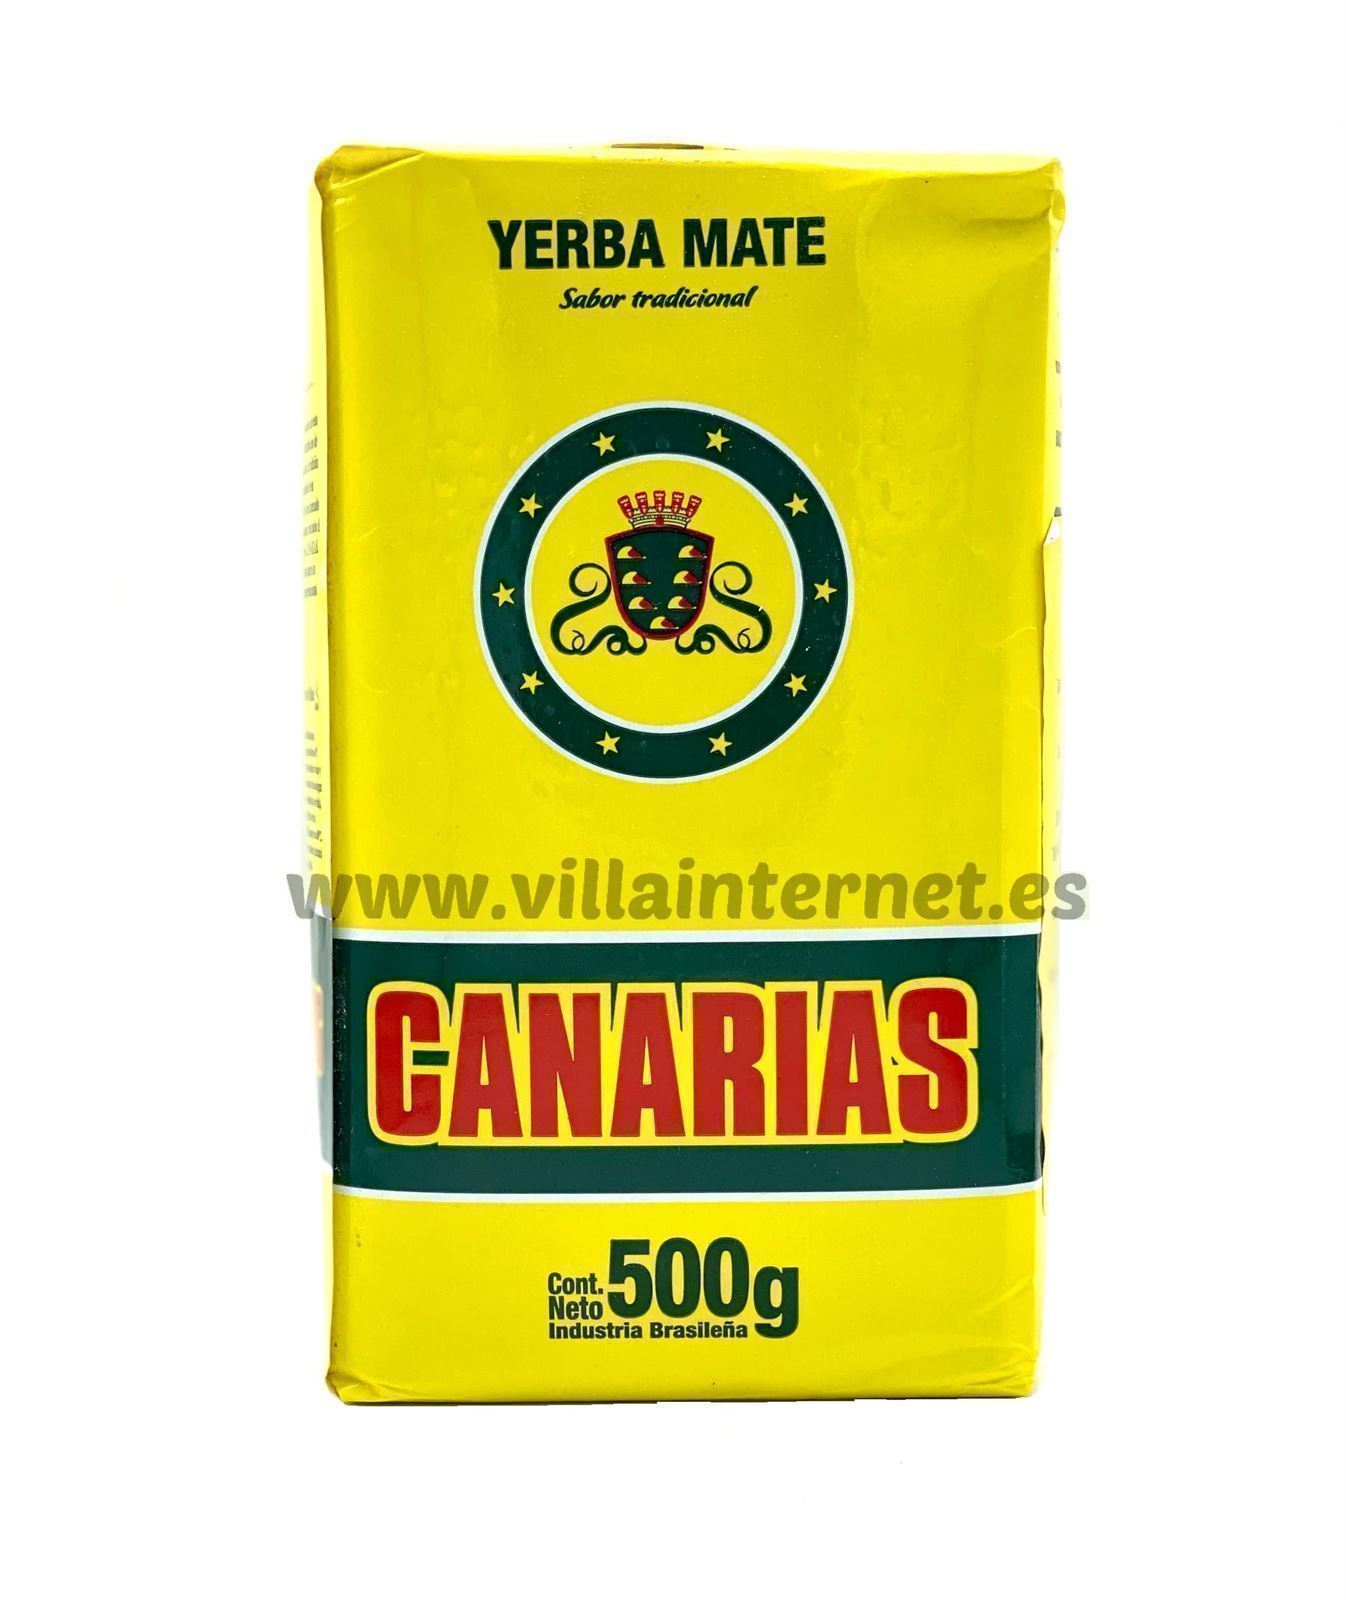 Yerba mate Canarias 500g - Imagen 1